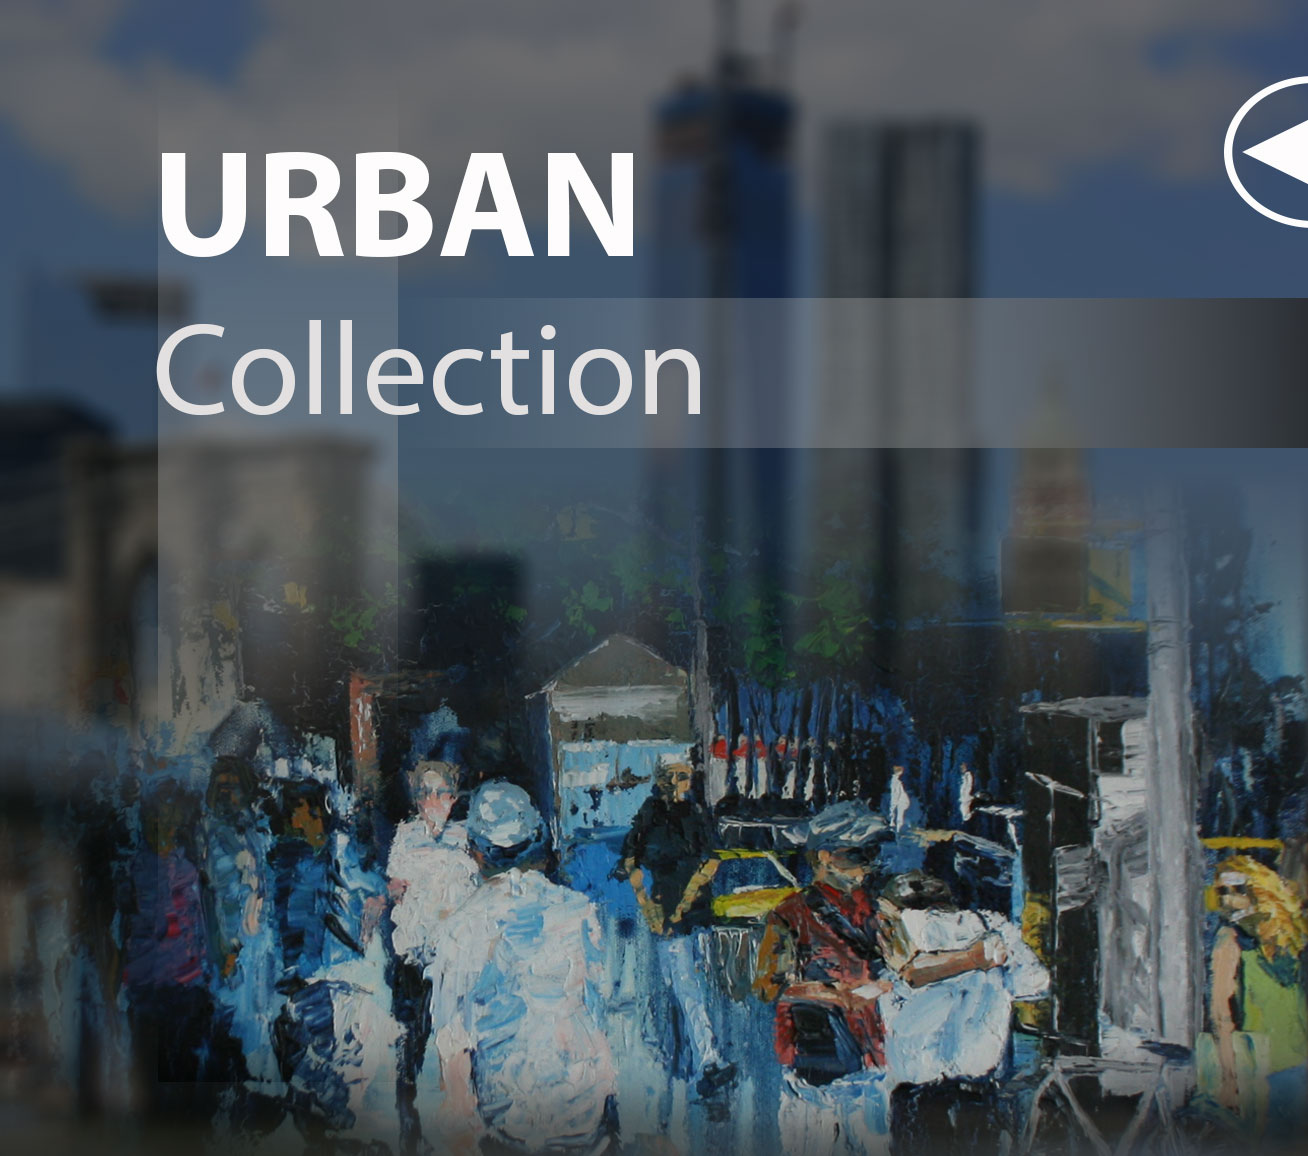 Urban collection